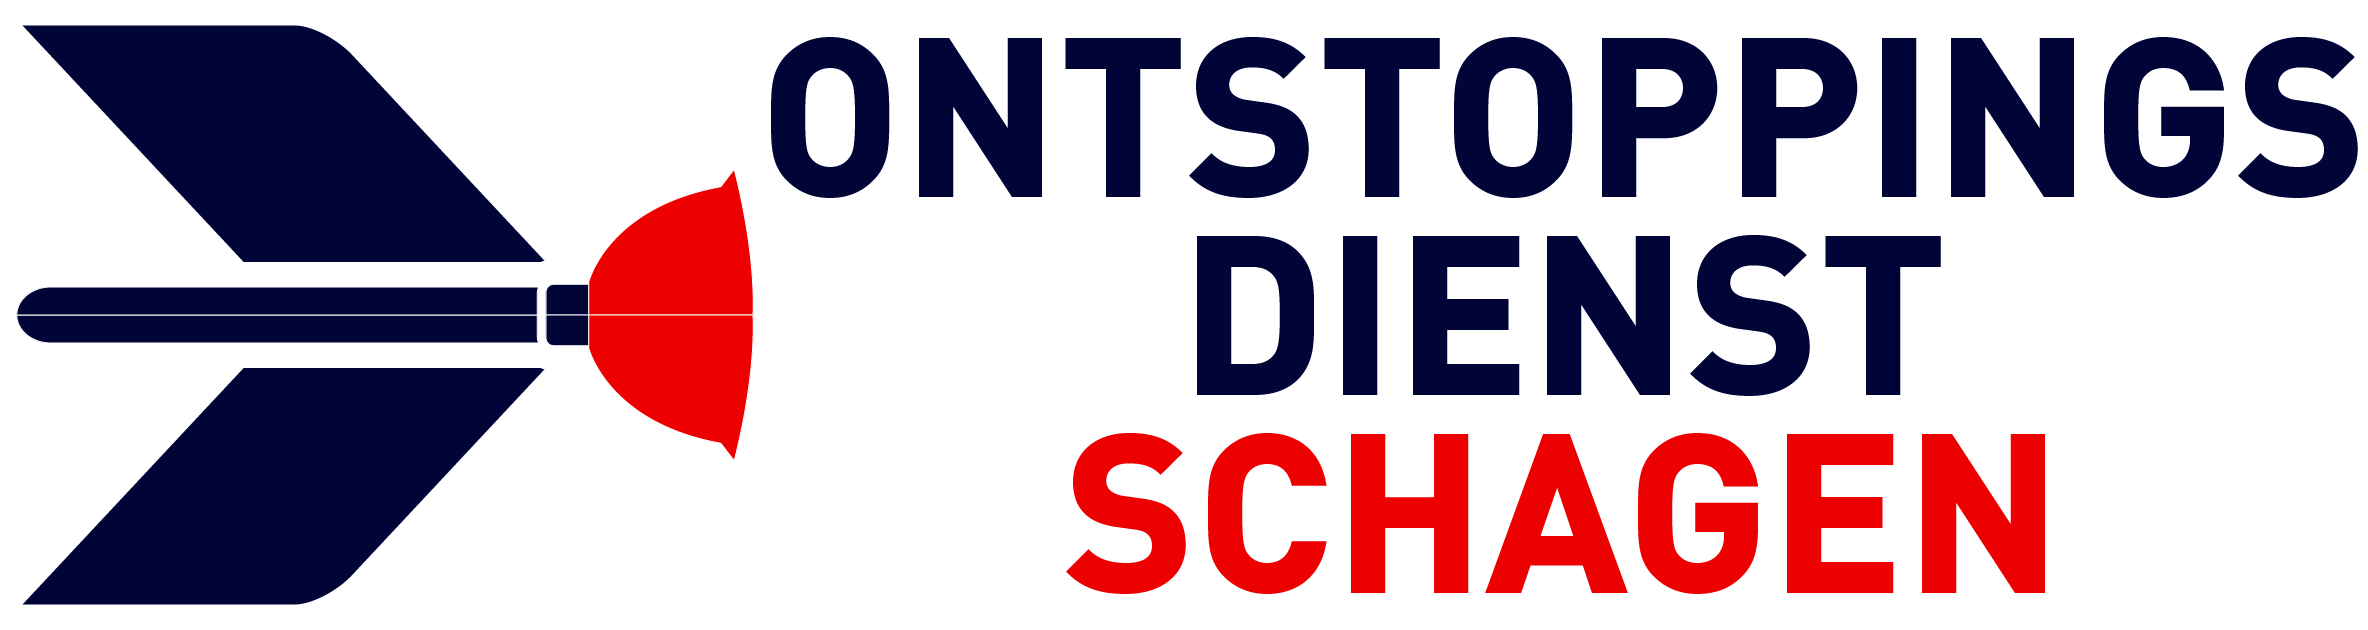 Ontstoppingsdienst Schagen logo